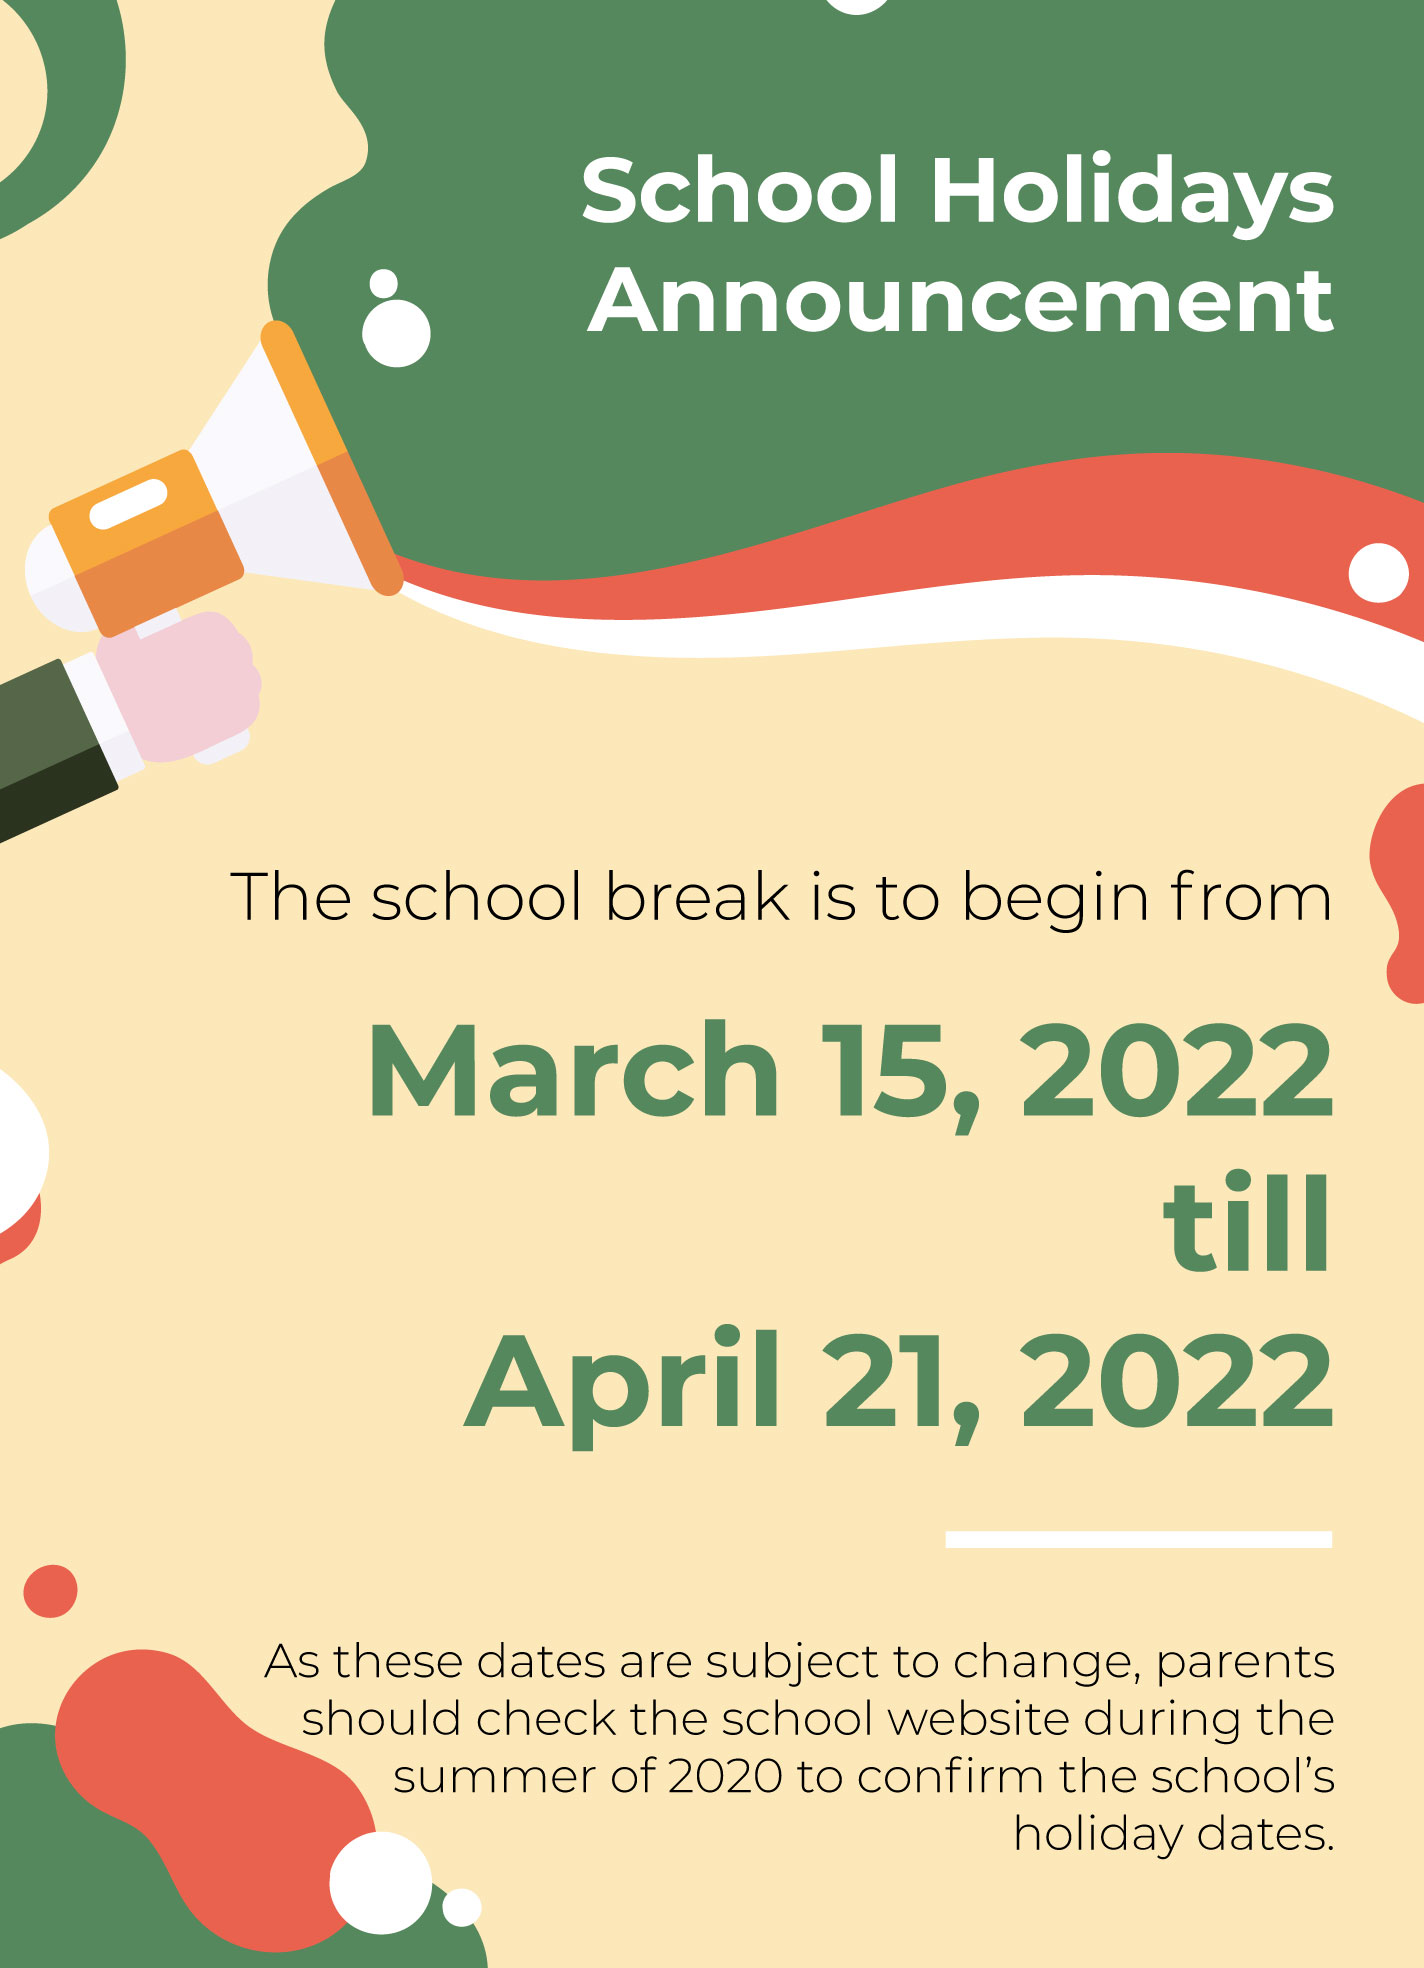 school announcement